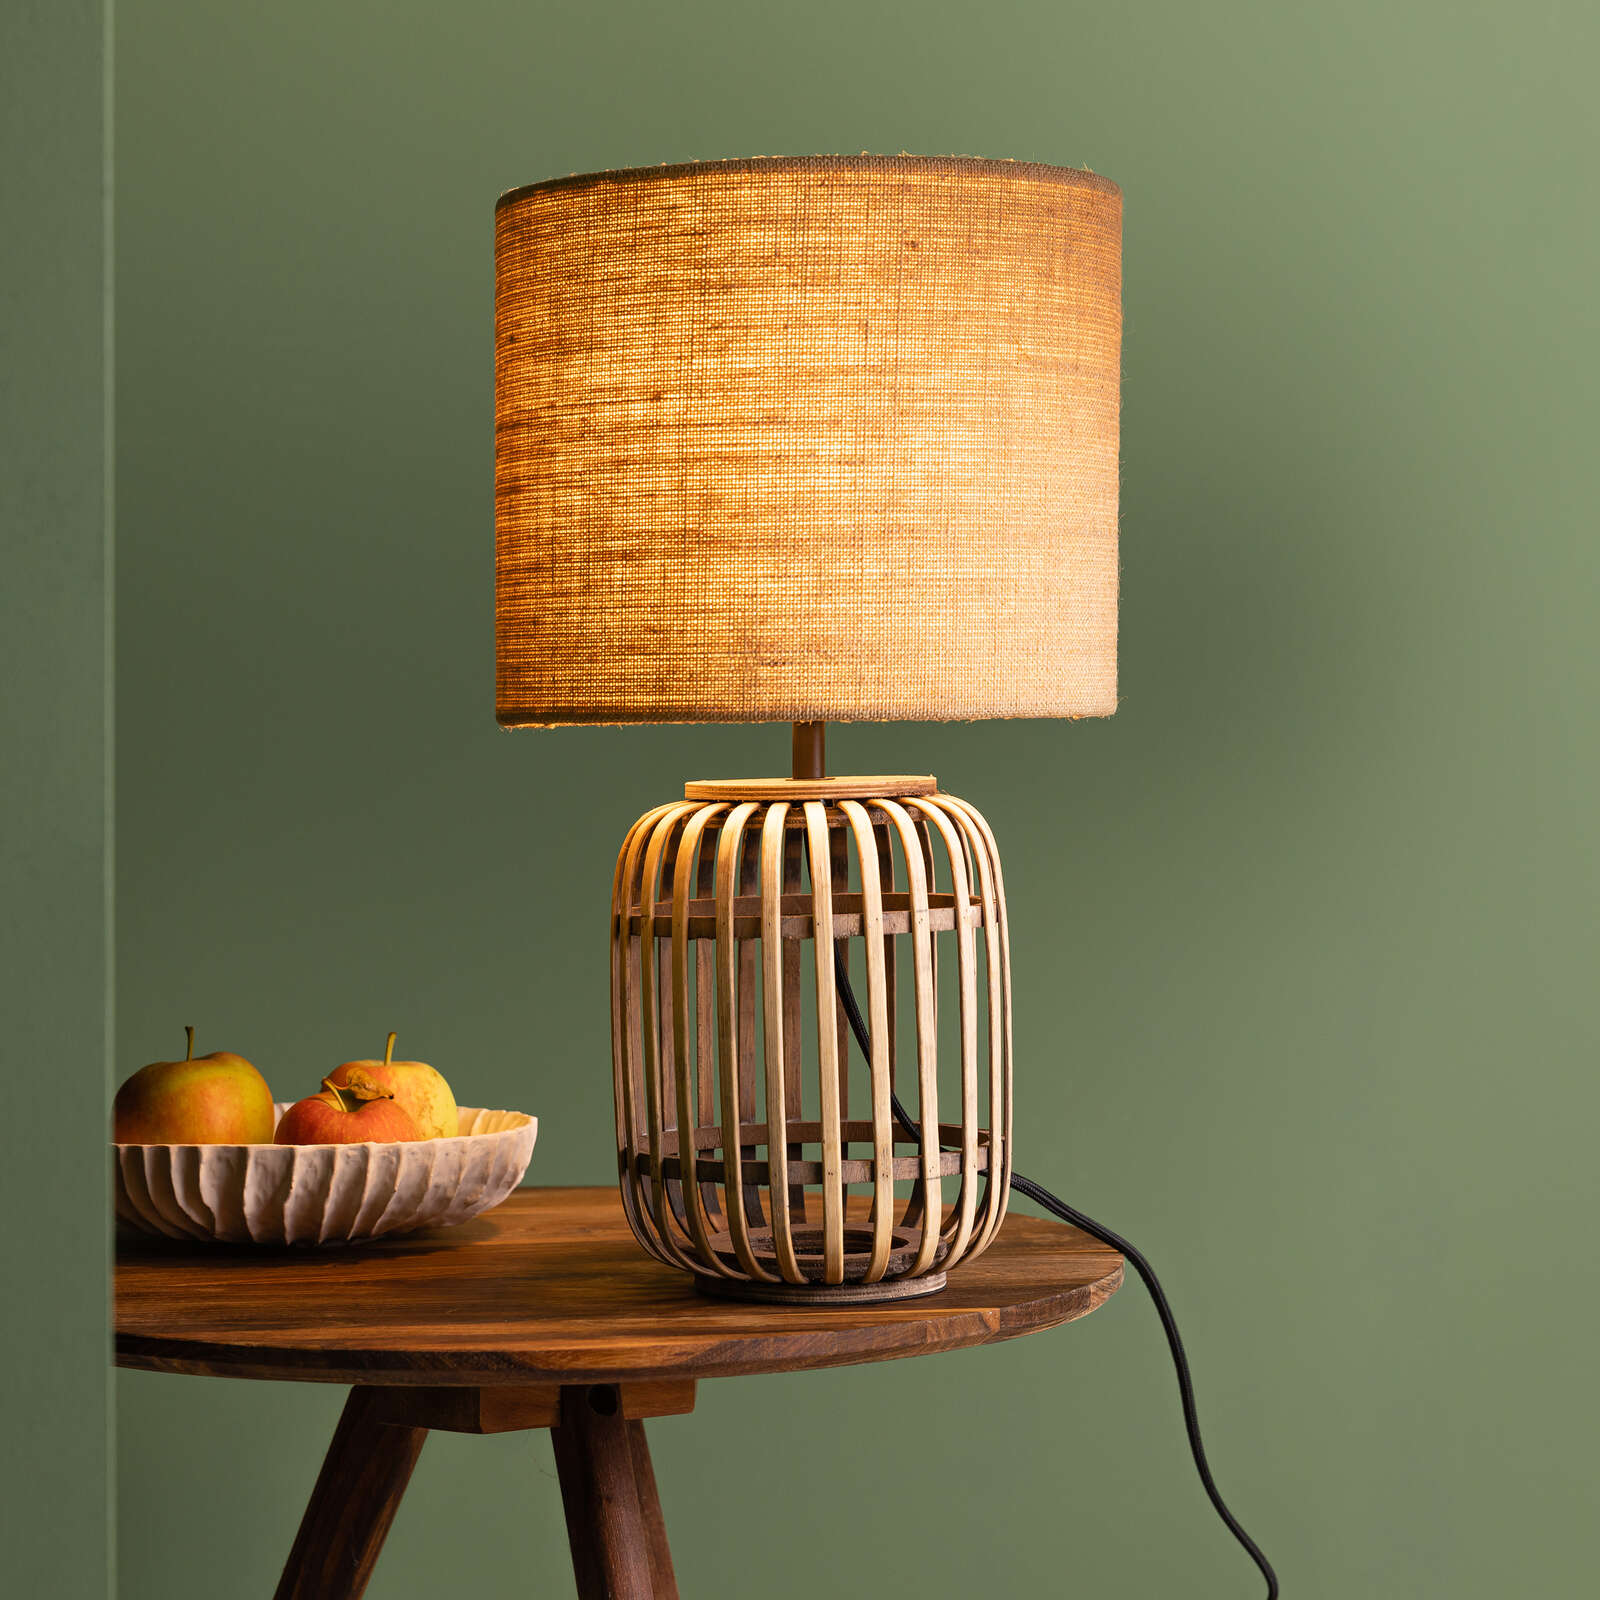             Bamboo table lamp - Willi 1 - Brown
        